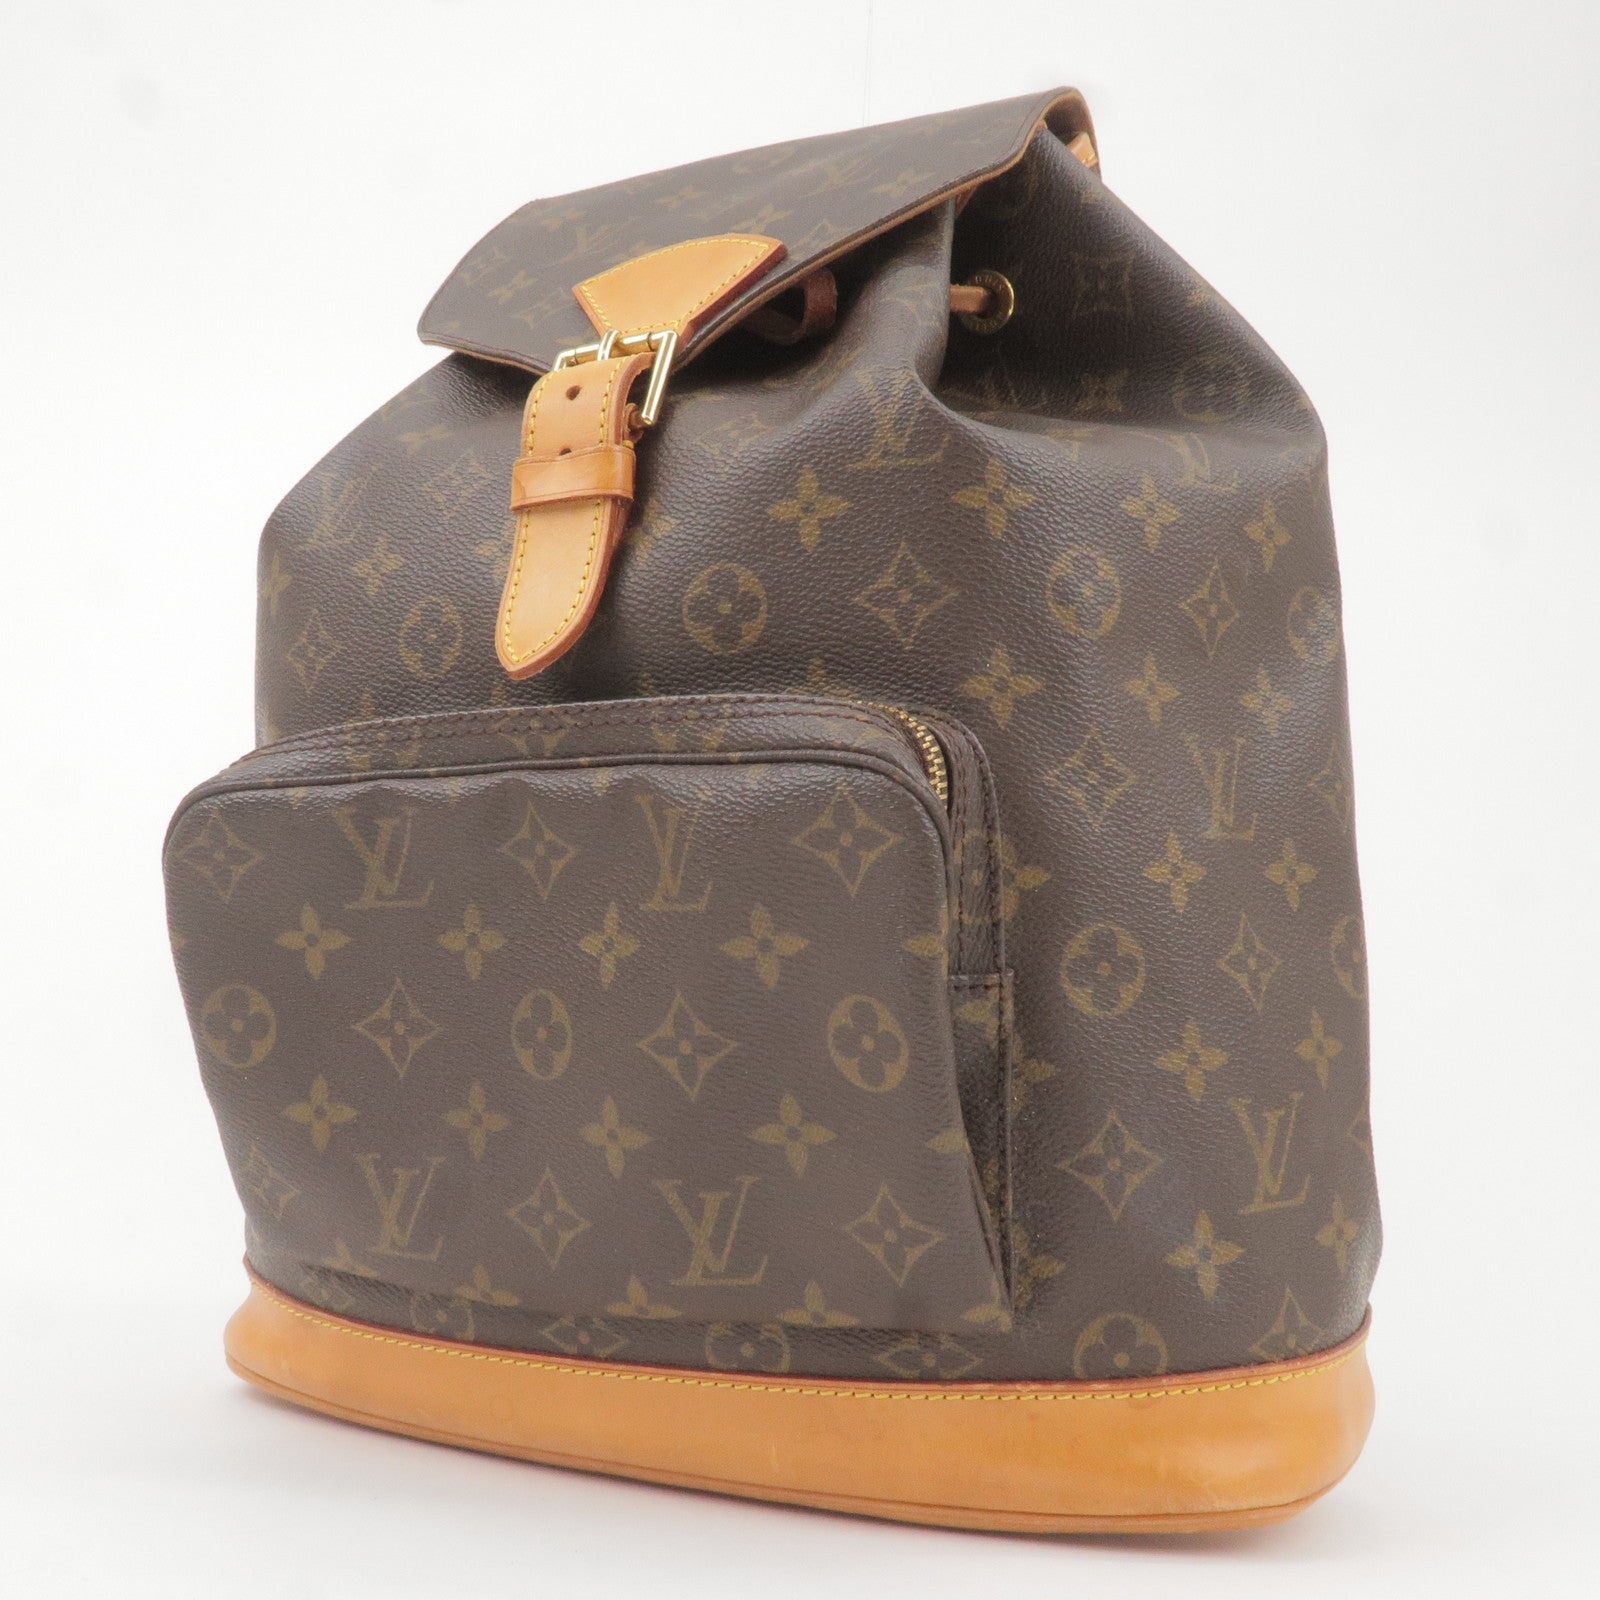 AUTHENTIC Louis Vuitton Montsouris Monogram GM Backpack PREOWNED